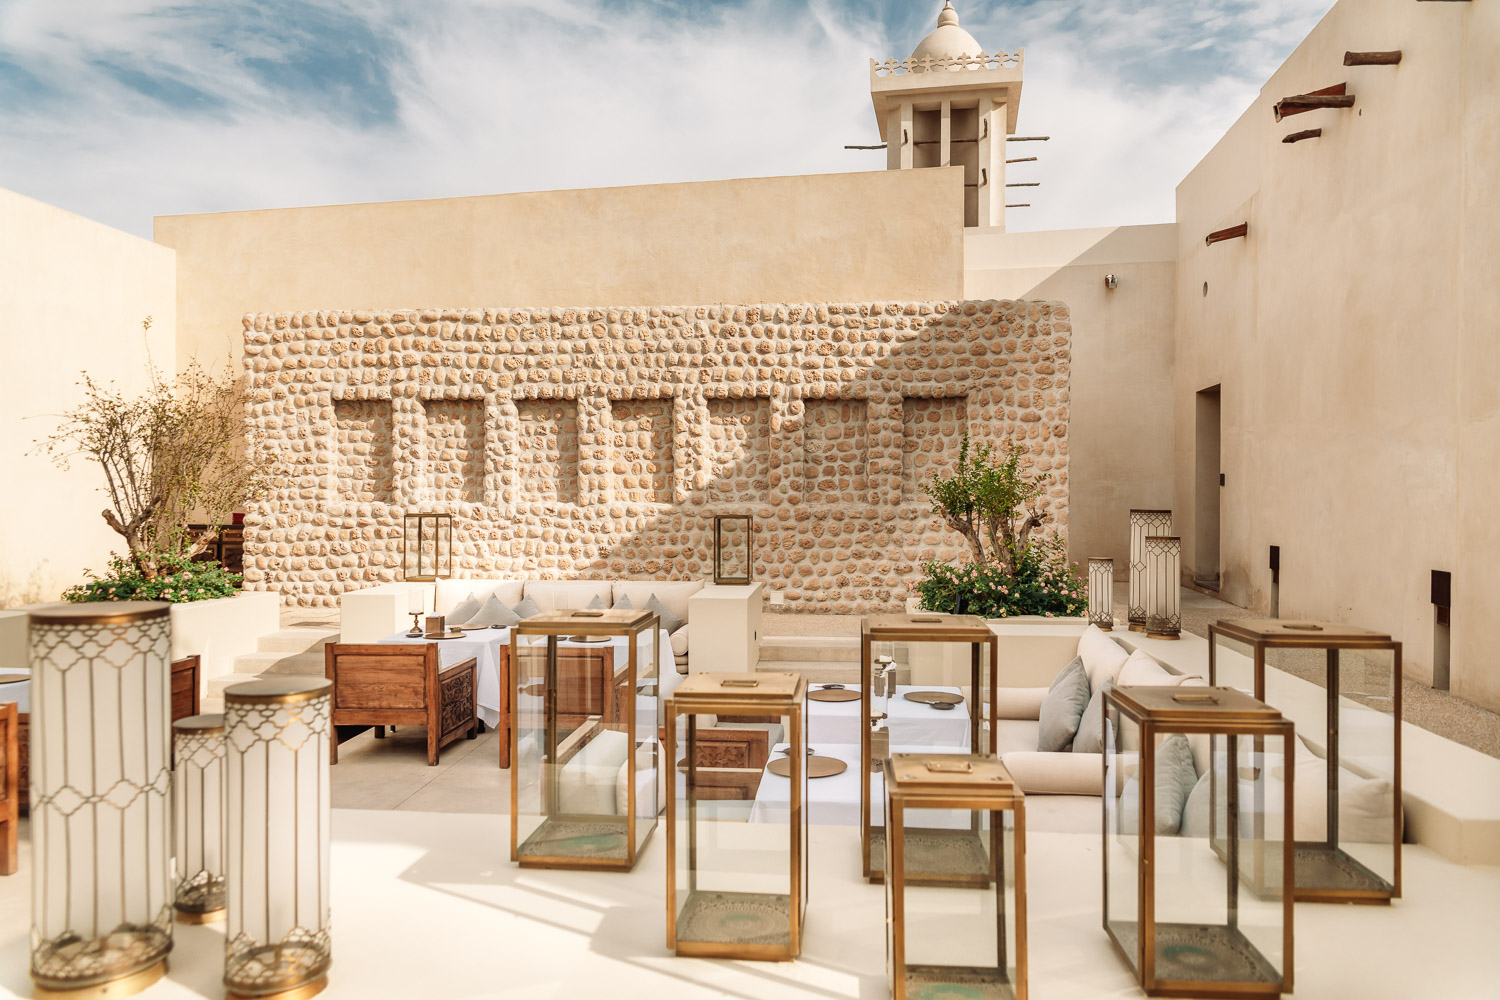 The Arabic Restaurant's outdoor dining area at Al Bait Sharjah